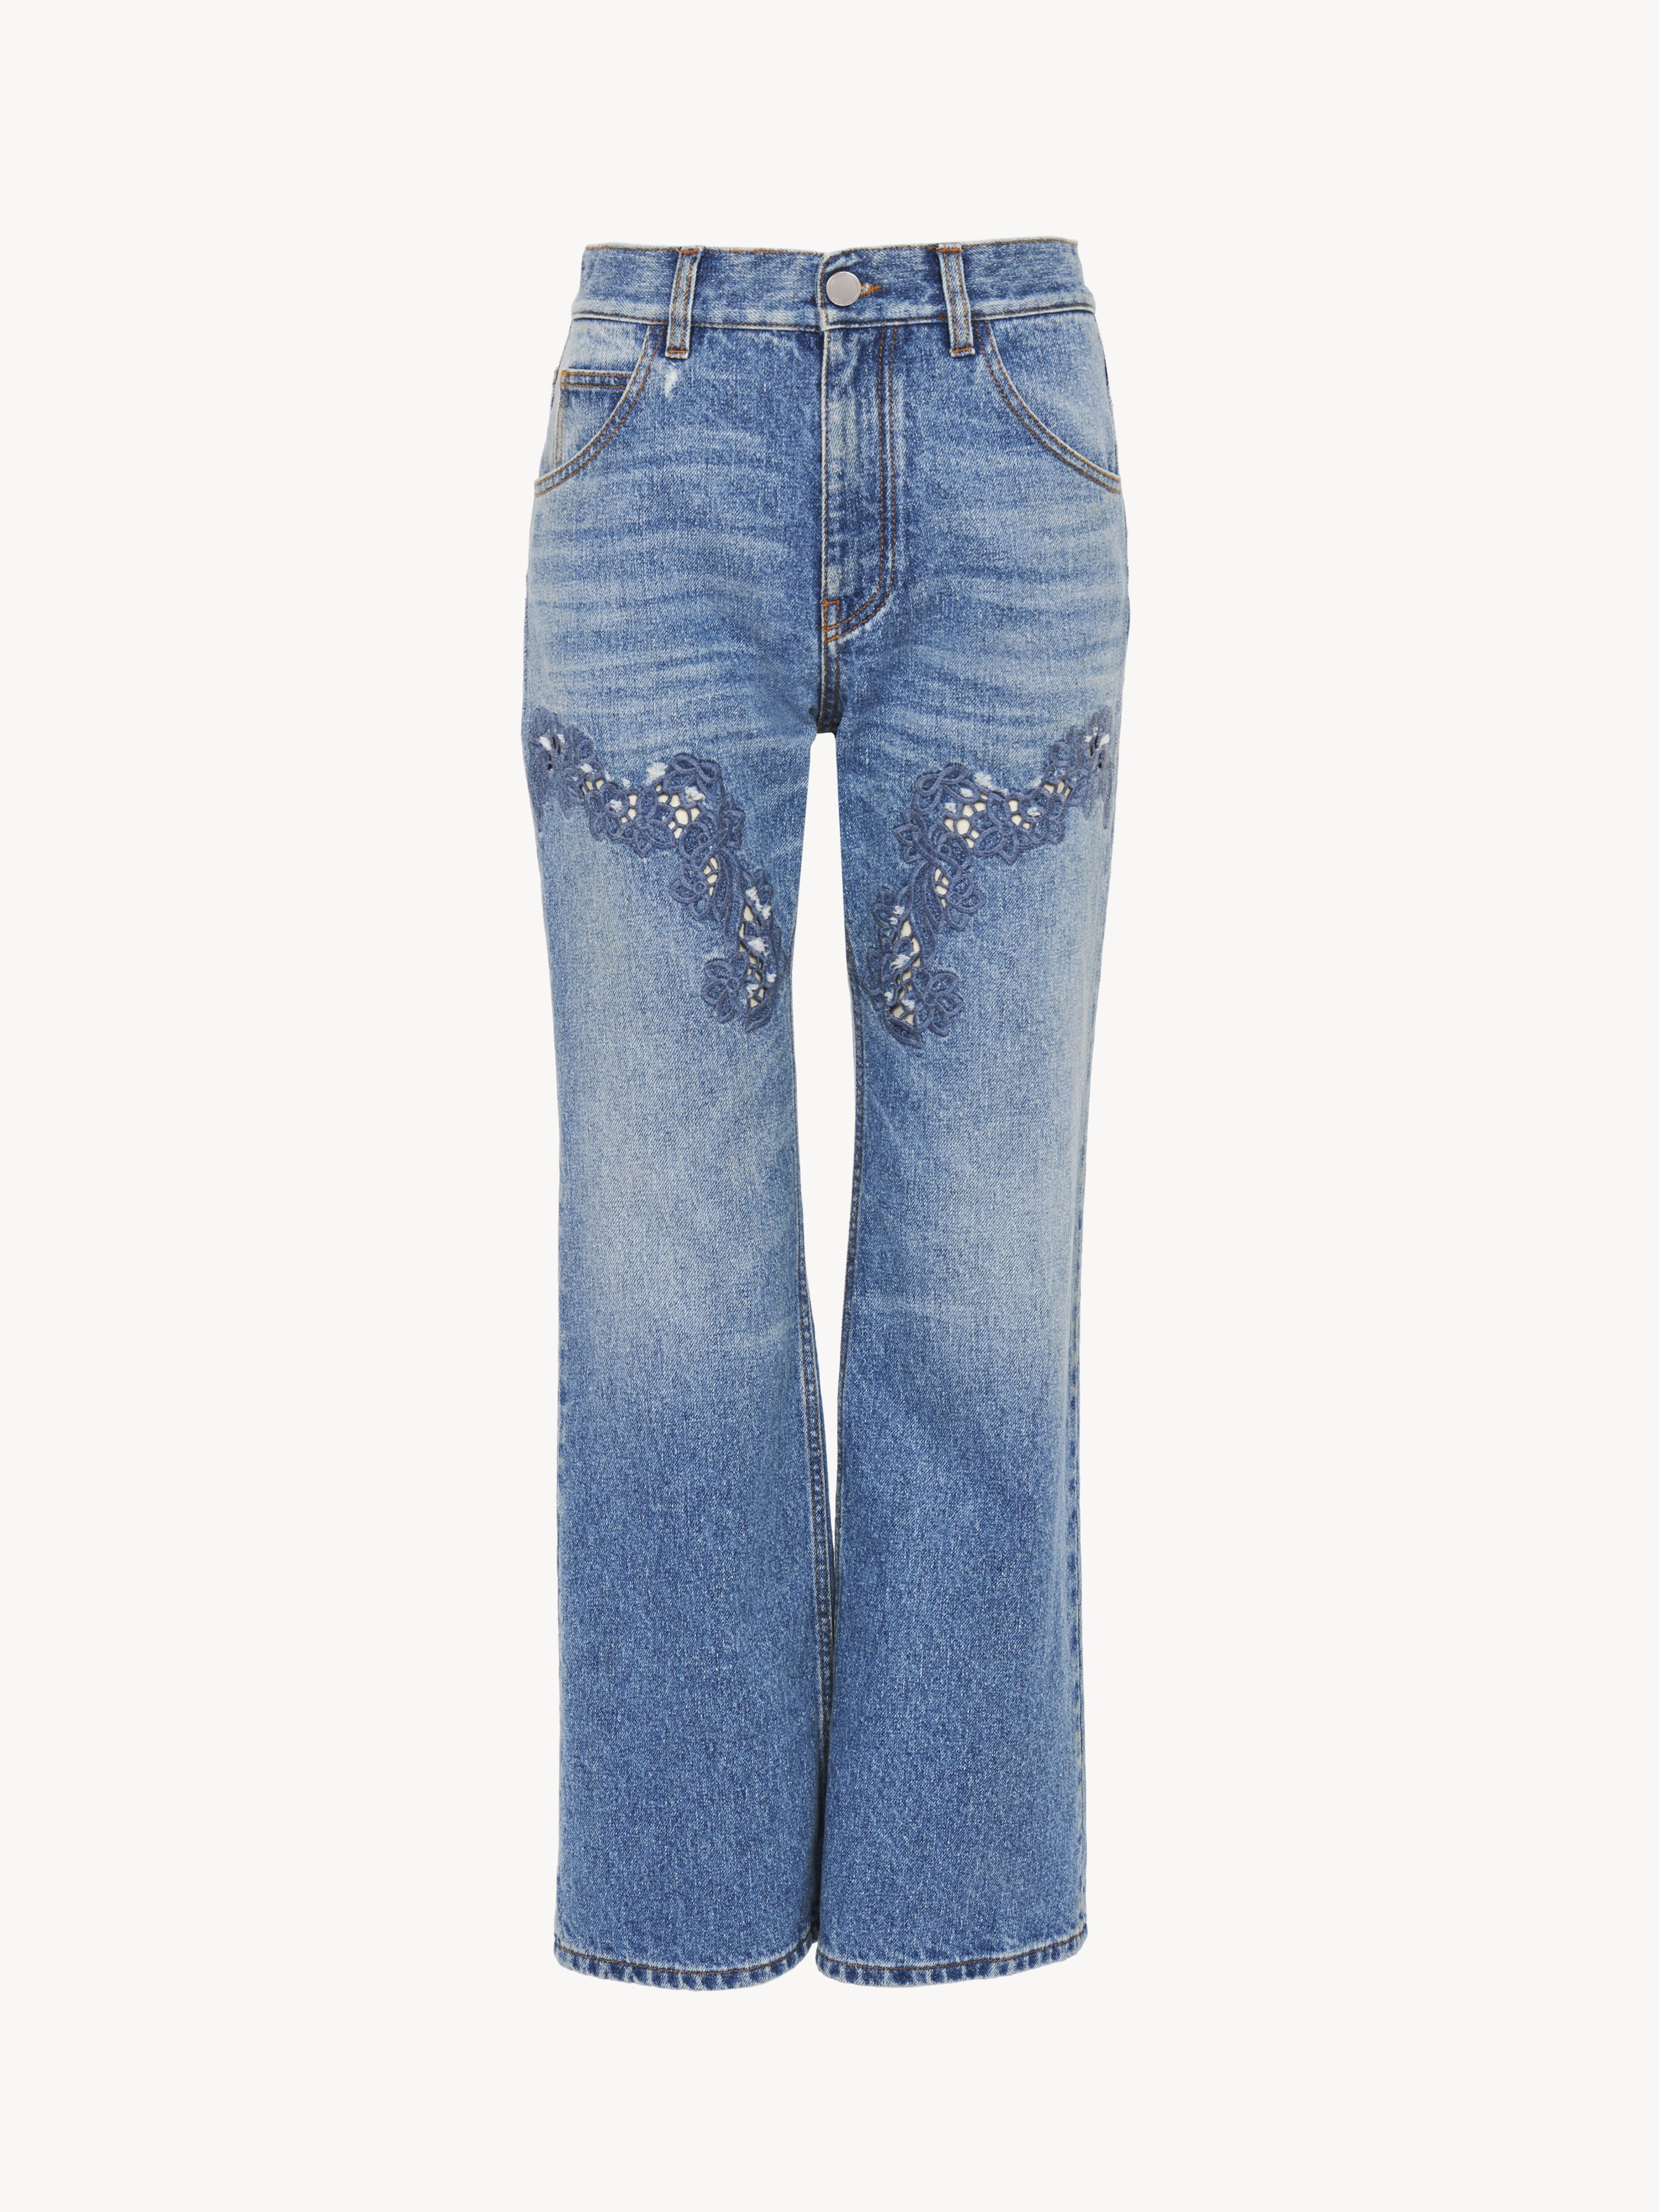 Chloé Cropped Bootcut Jeans Blue Size 30 100% Cotton